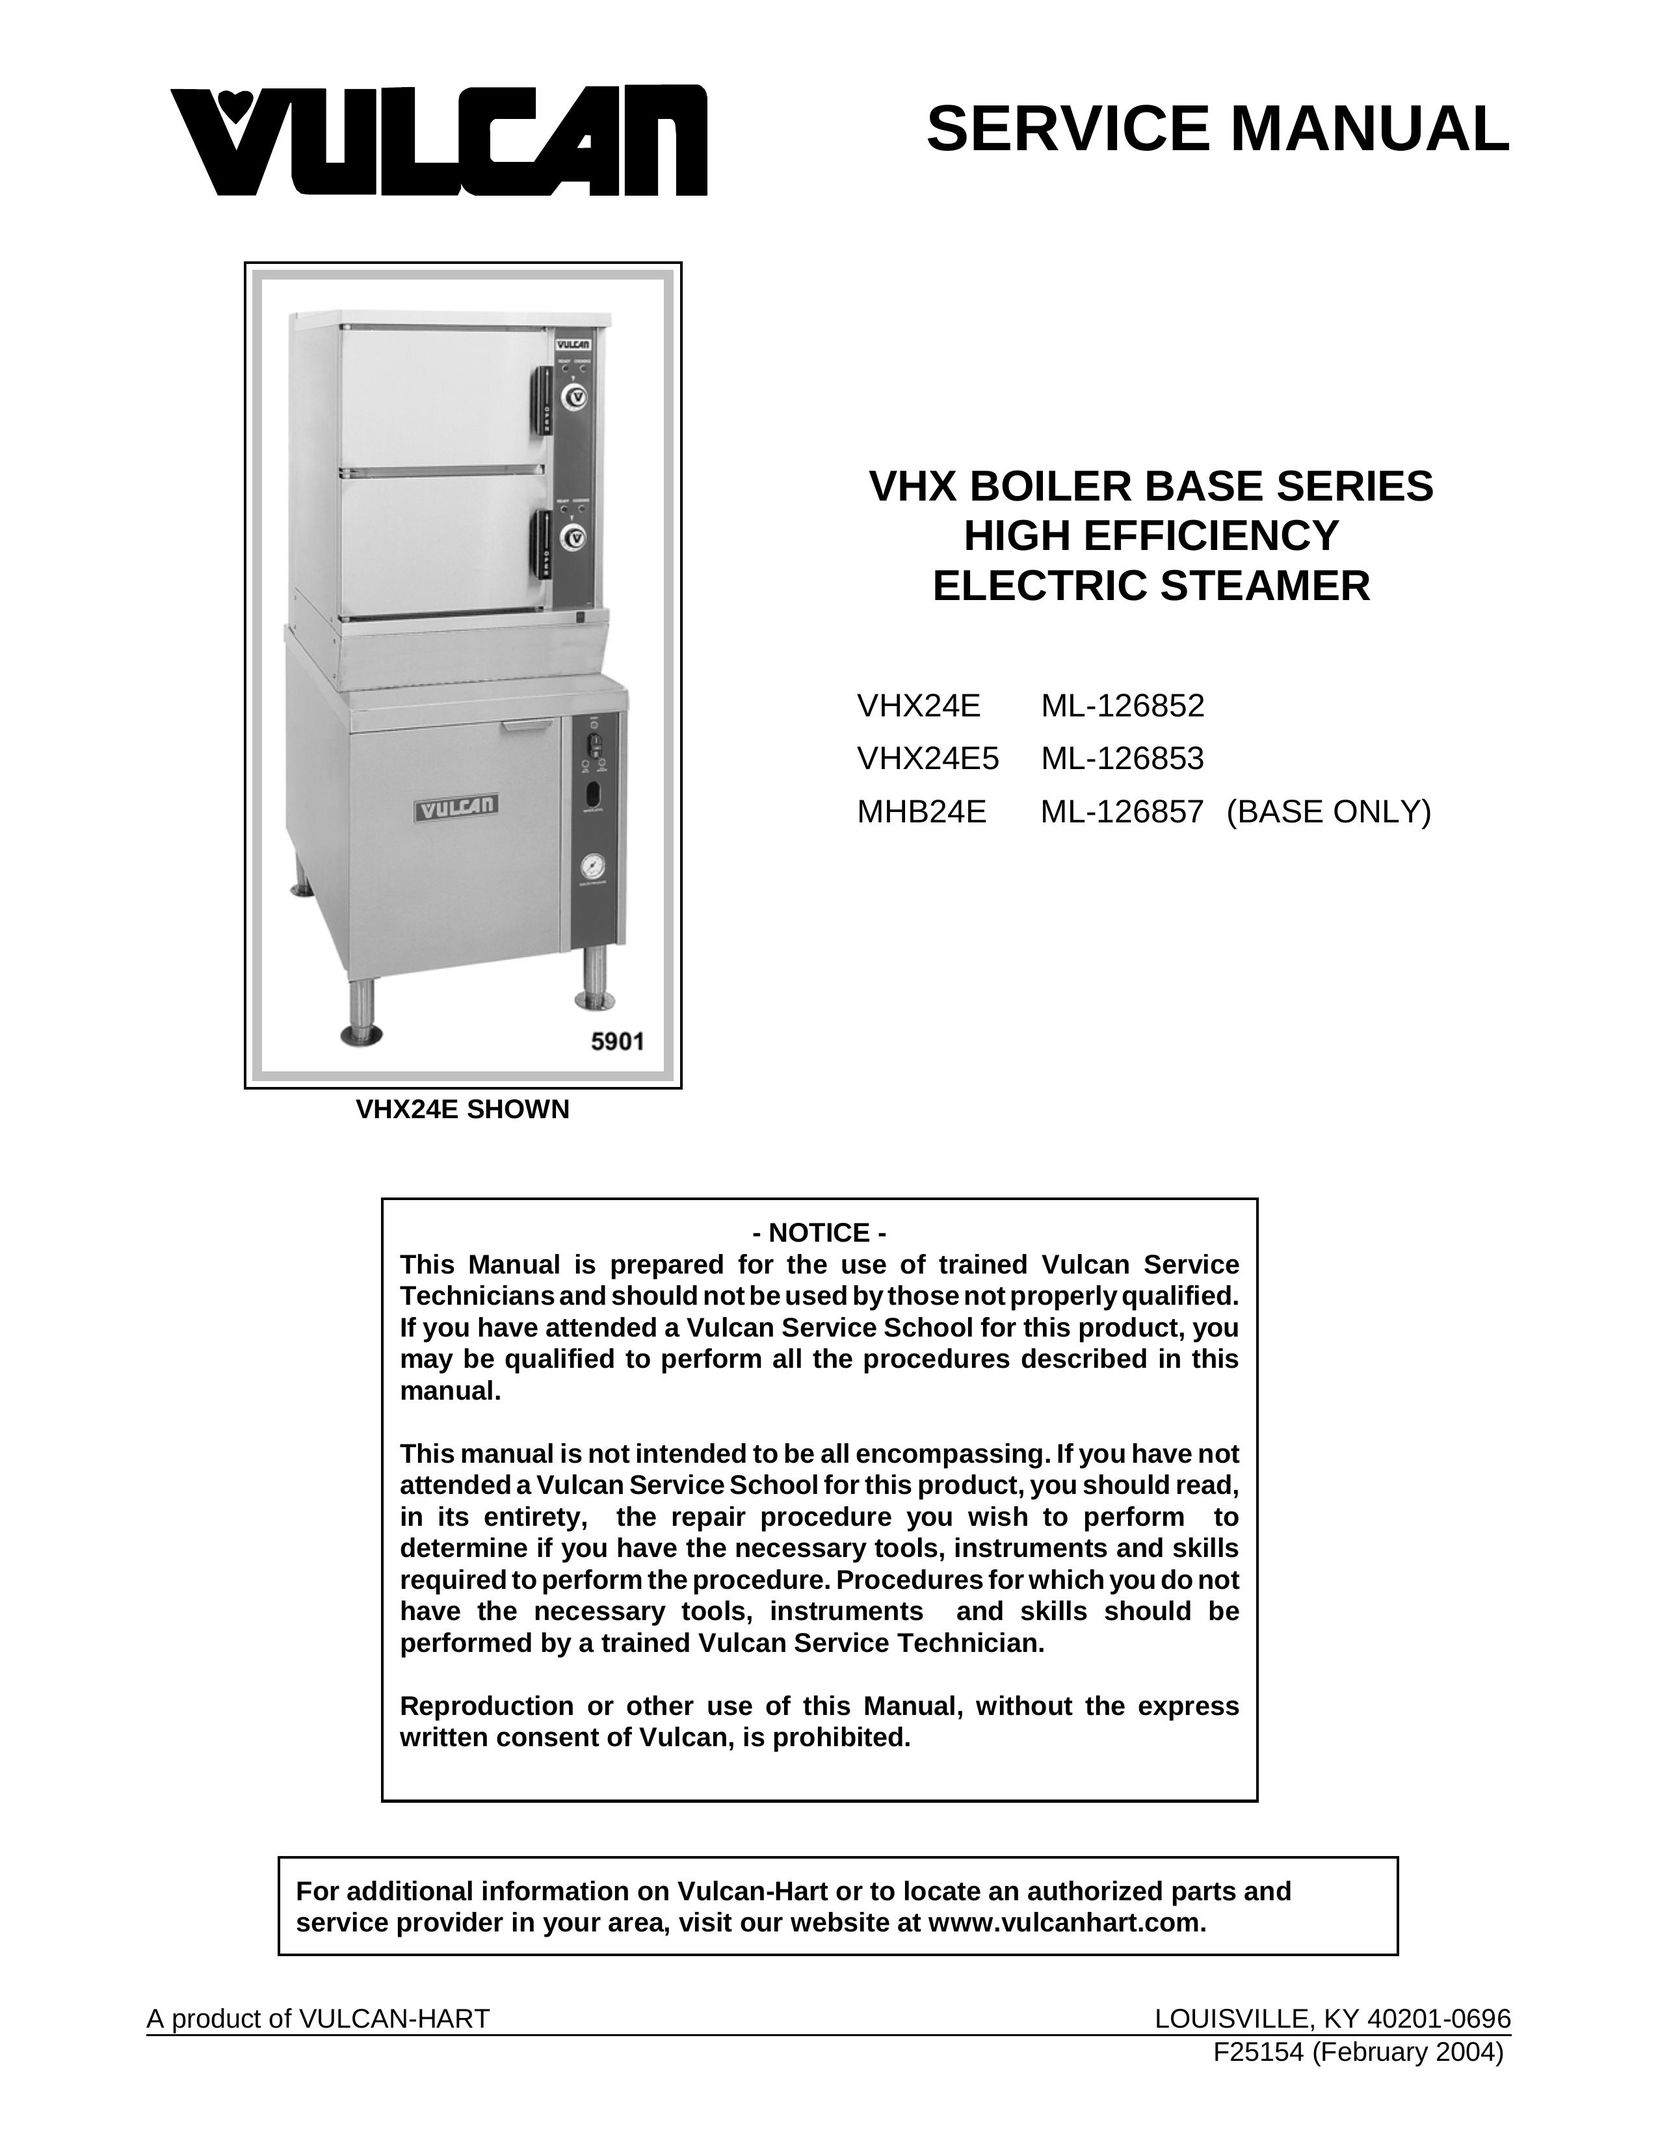 Vulcan-Hart ML-126852 Electric Steamer User Manual